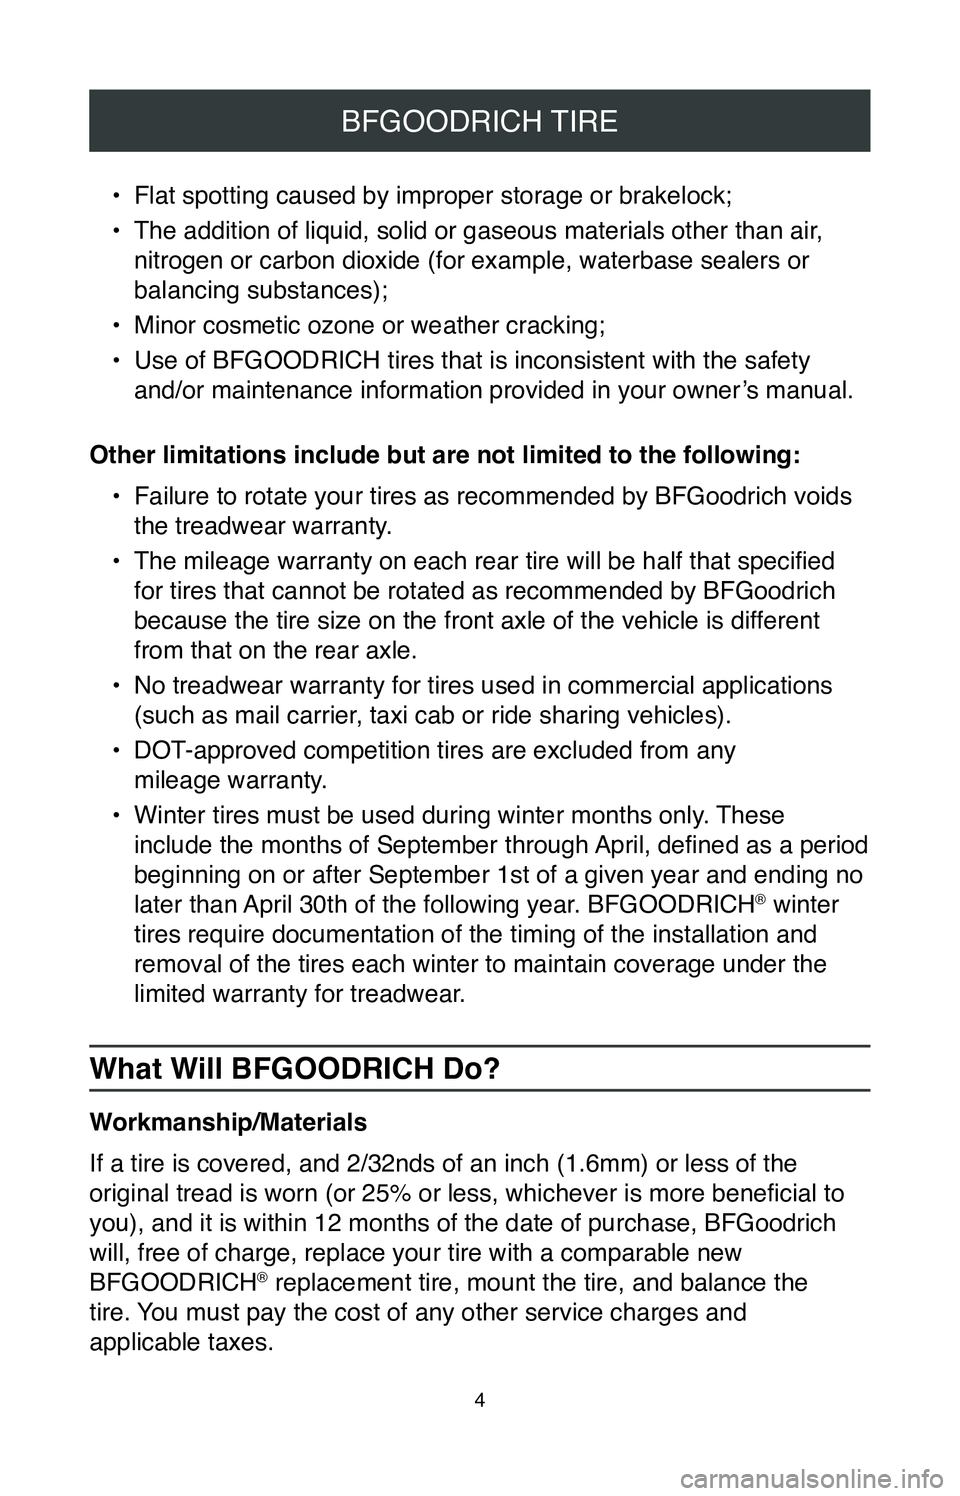 TOYOTA RAV4 HYBRID 2020  Warranties & Maintenance Guides (in English) 4
BFGOODRICH TIRE
